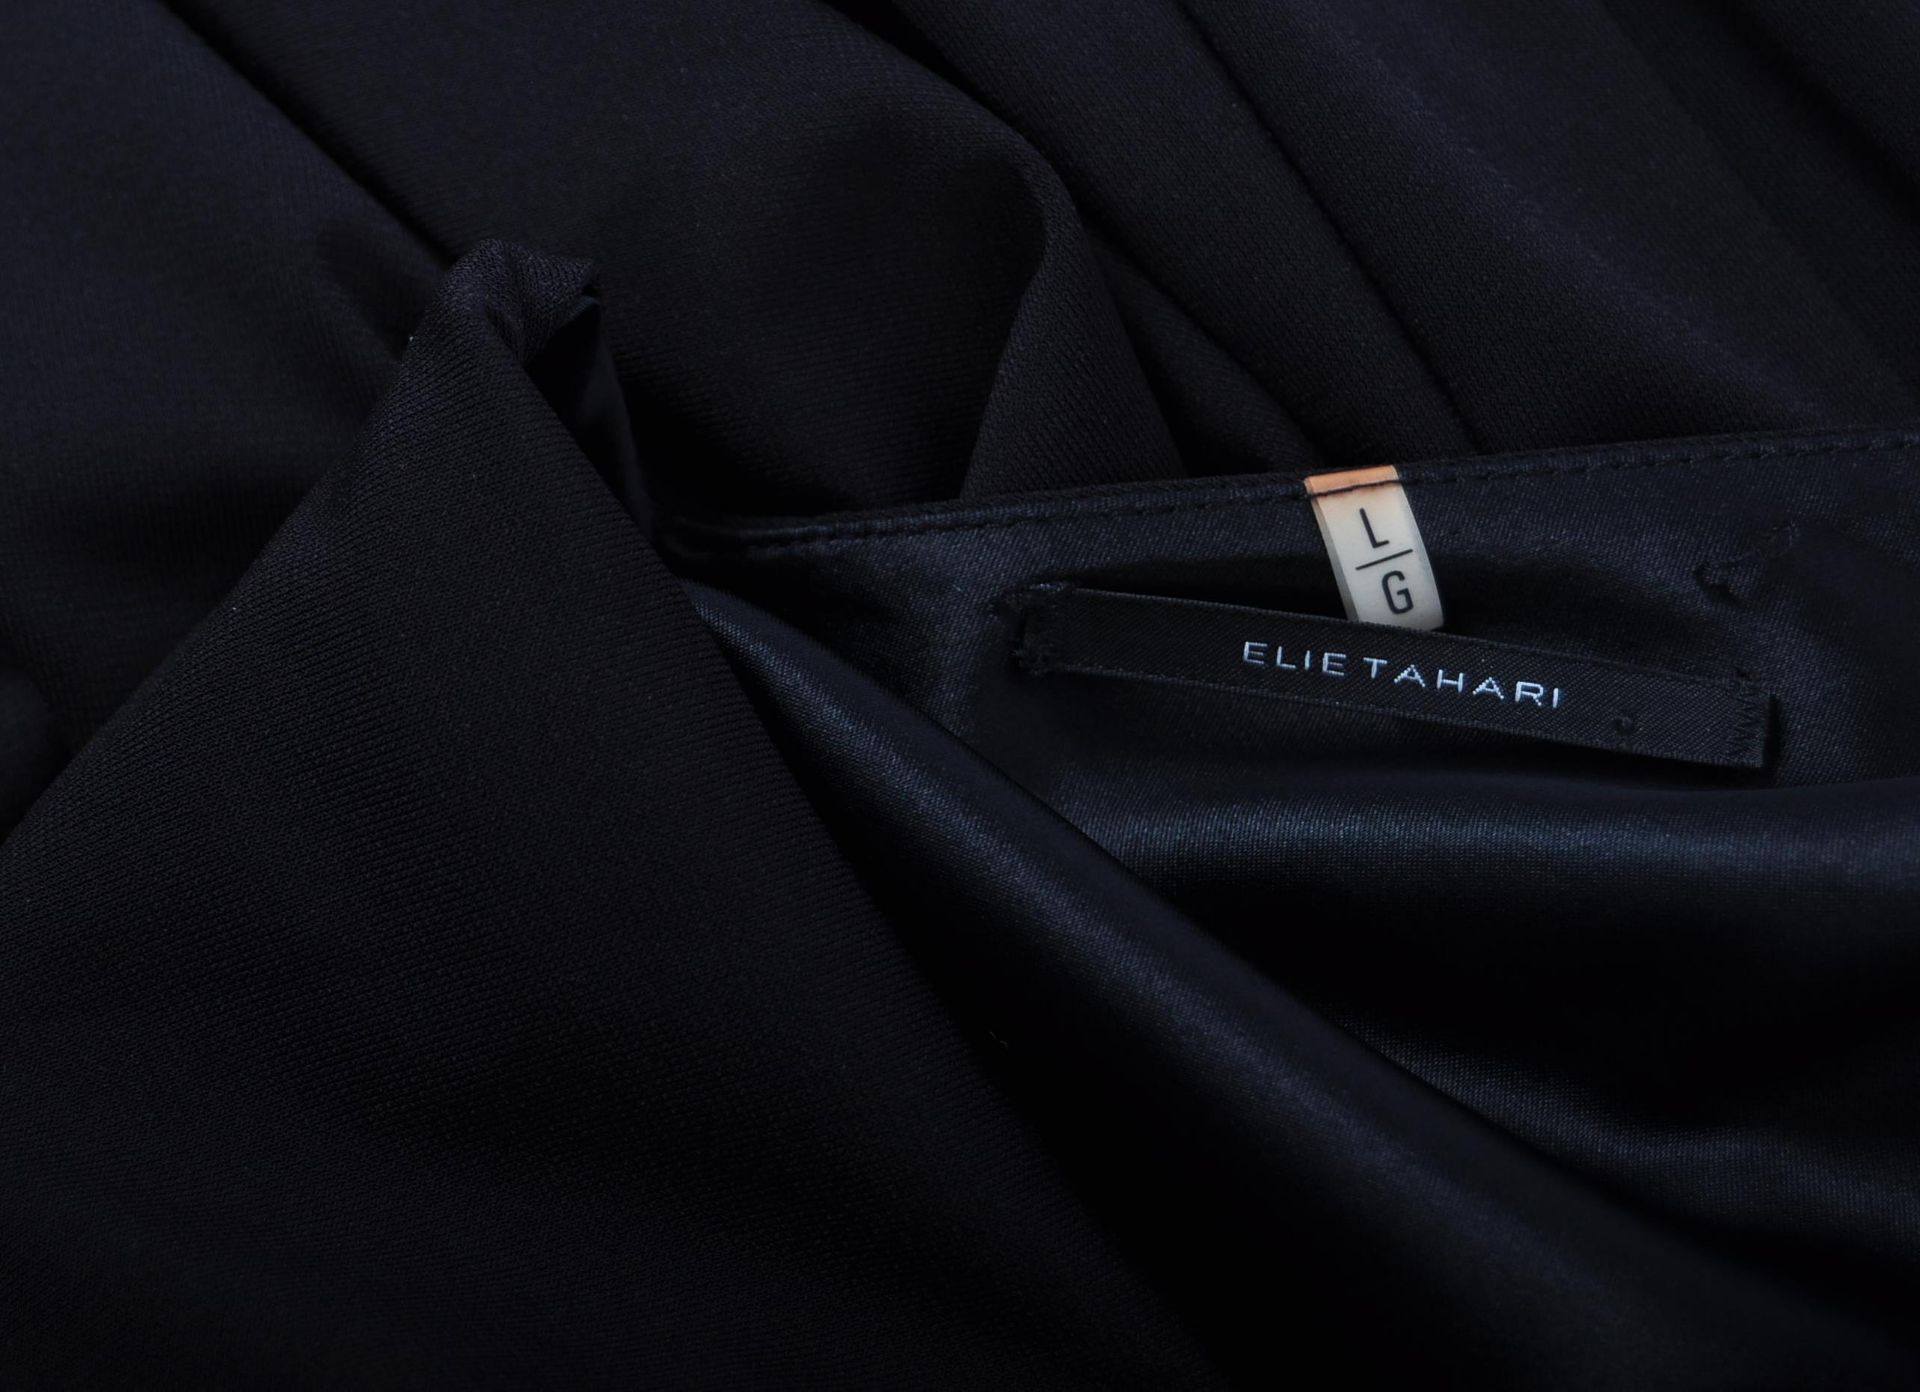 ANGELA GRANT COLLECTION - TAHARI - BLACK DRESS - Bild 5 aus 5